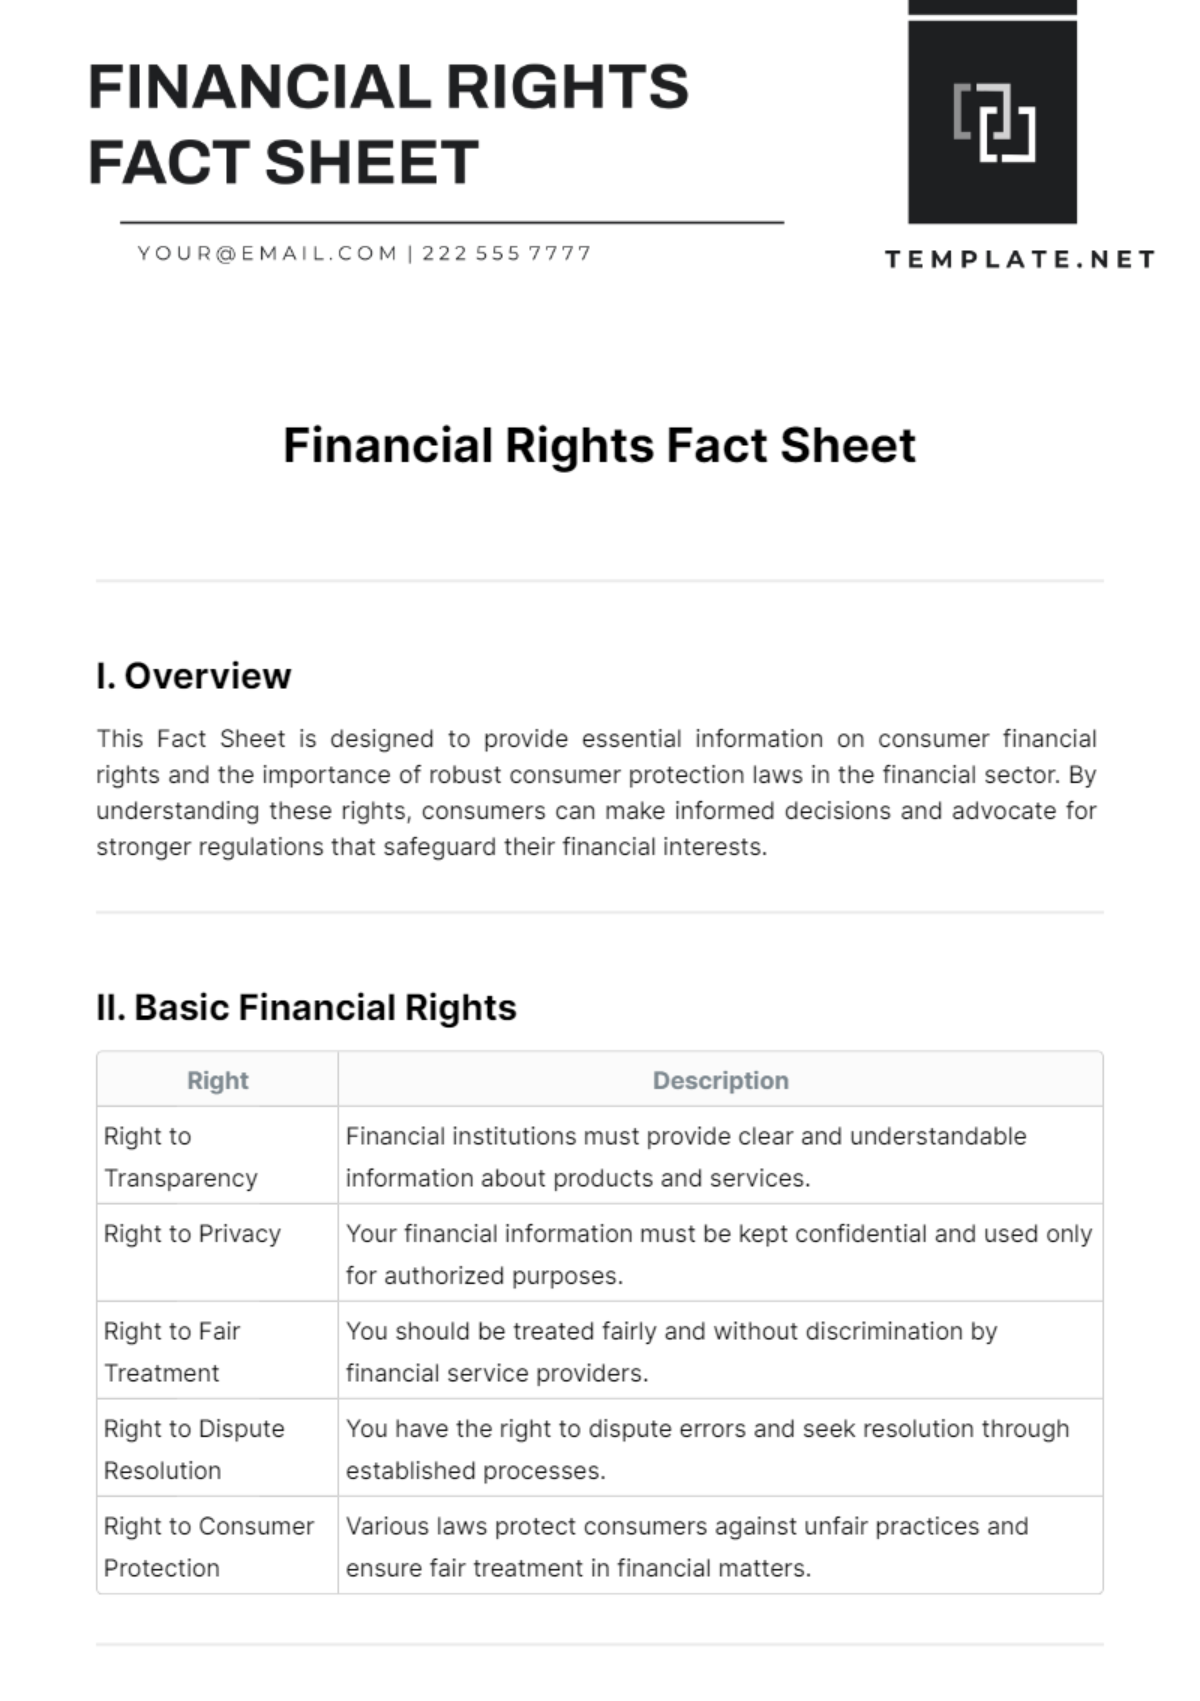 Financial Rights Fact Sheet Template